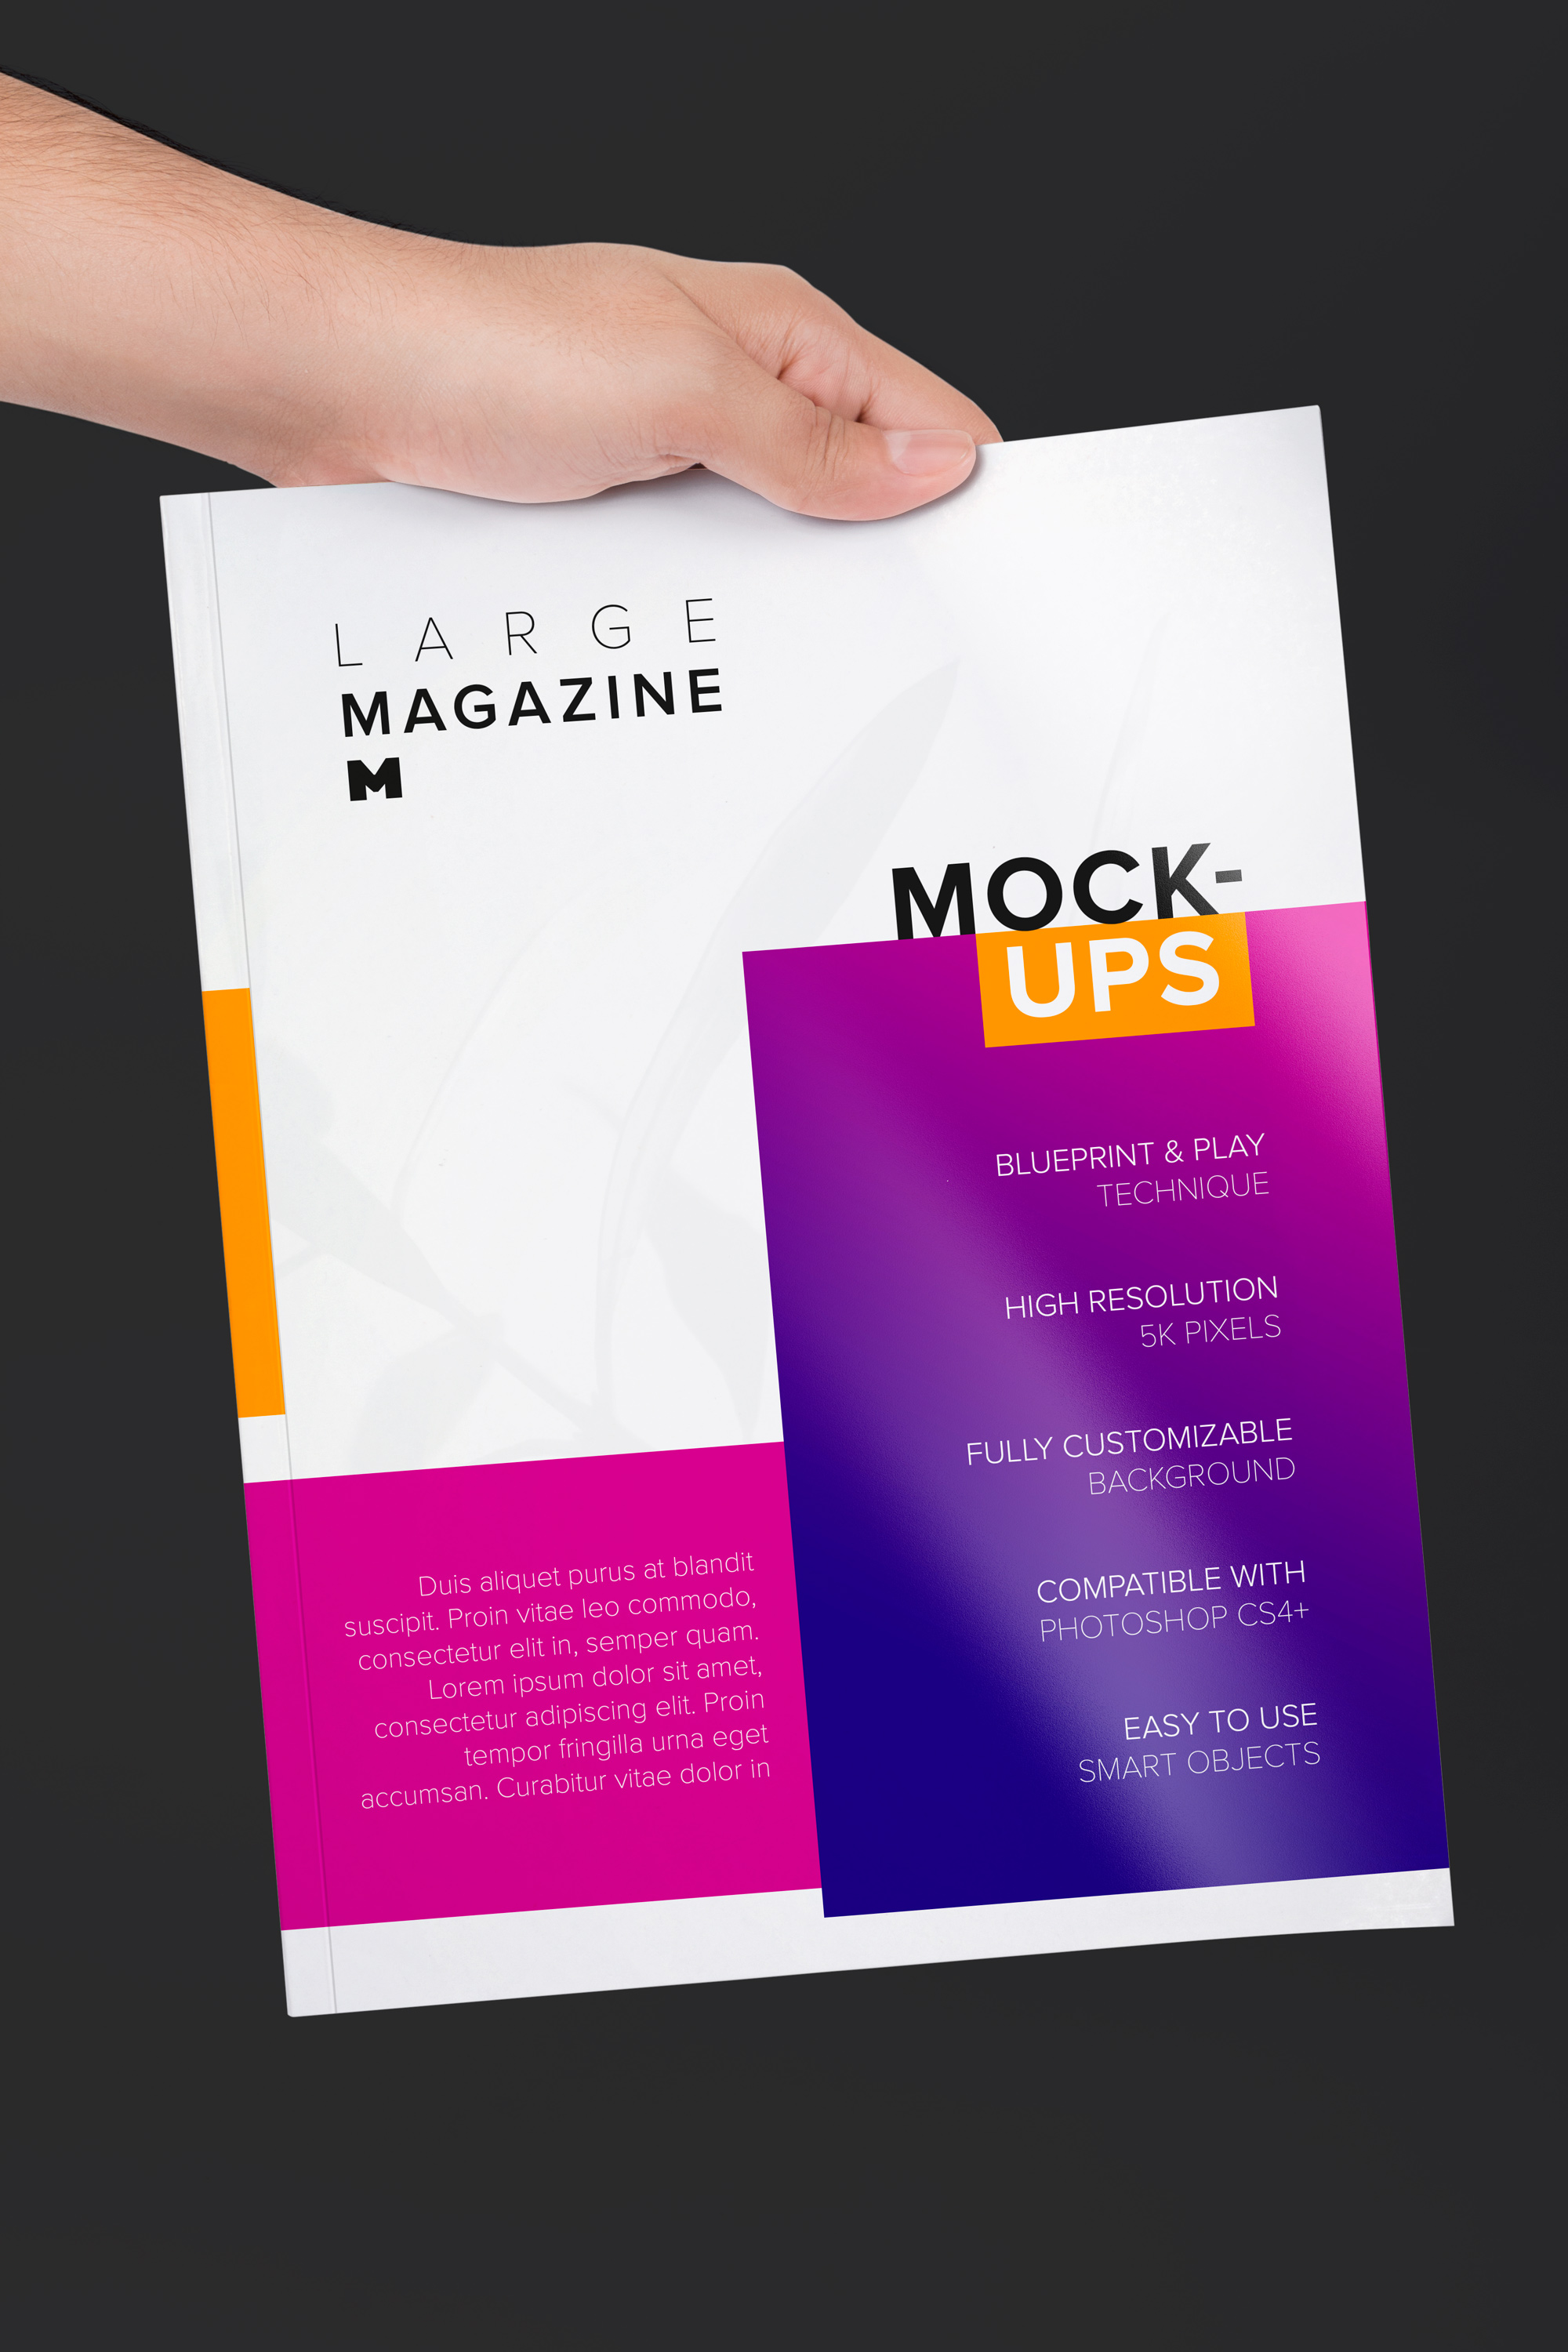 大型杂志封面设计效果图样机04 Large Magazine Cover Mockup 04插图(4)